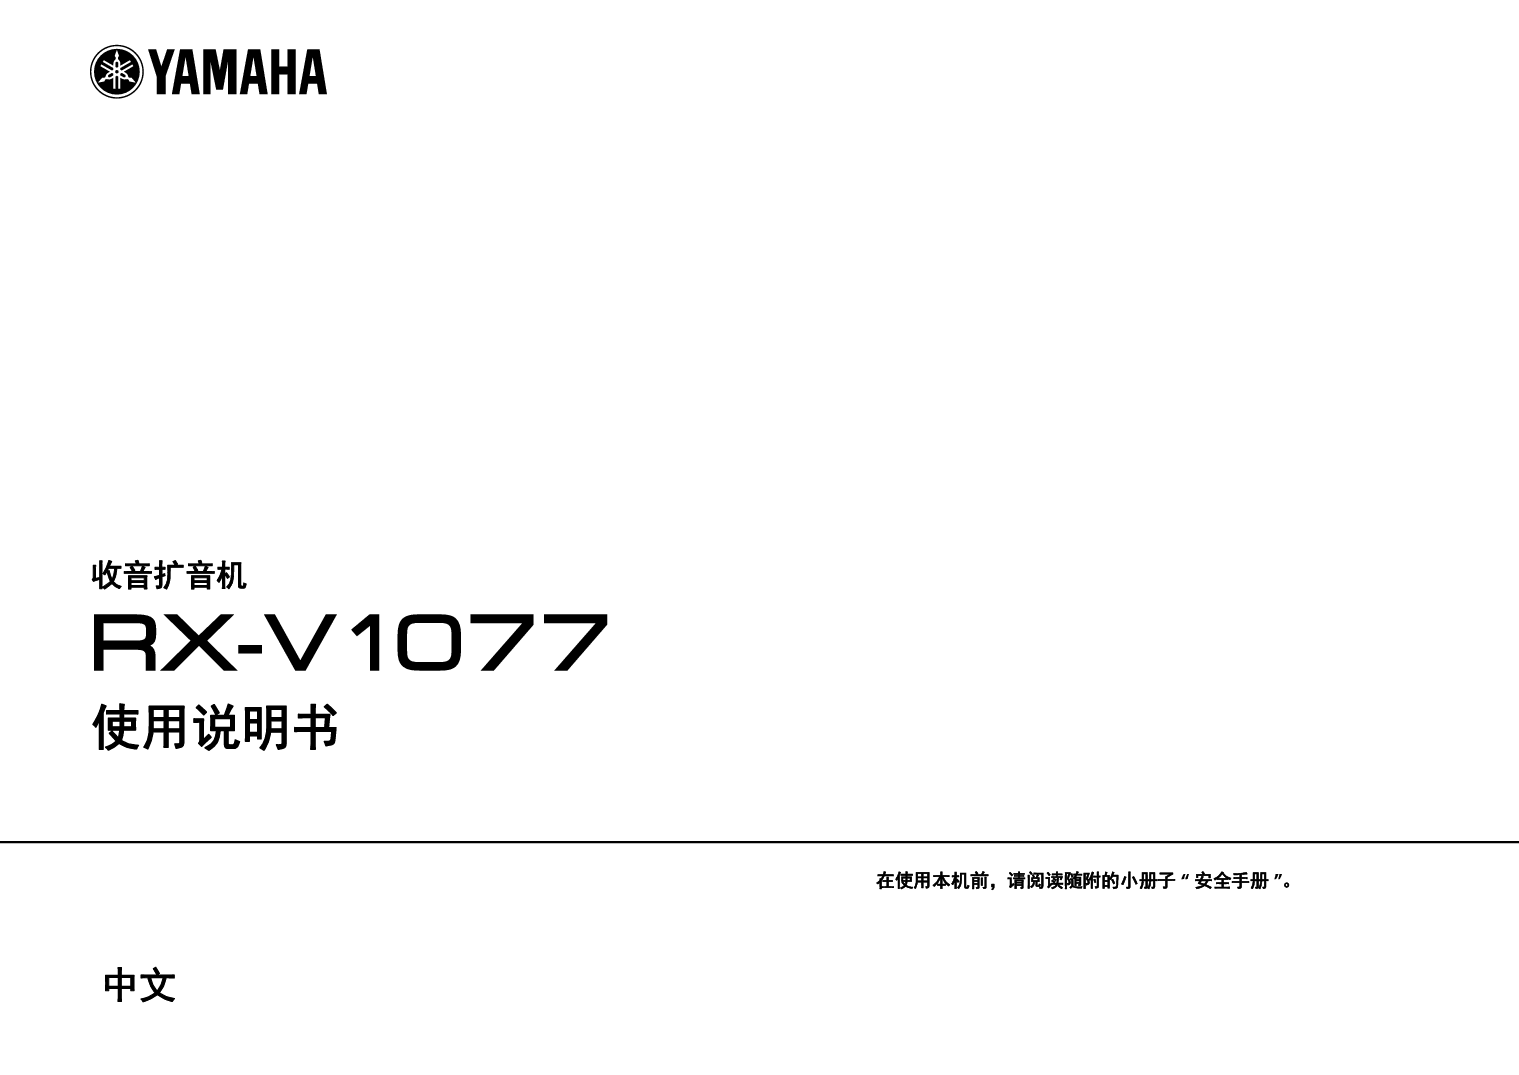 雅马哈 Yamaha RX-V1077 使用说明书 封面